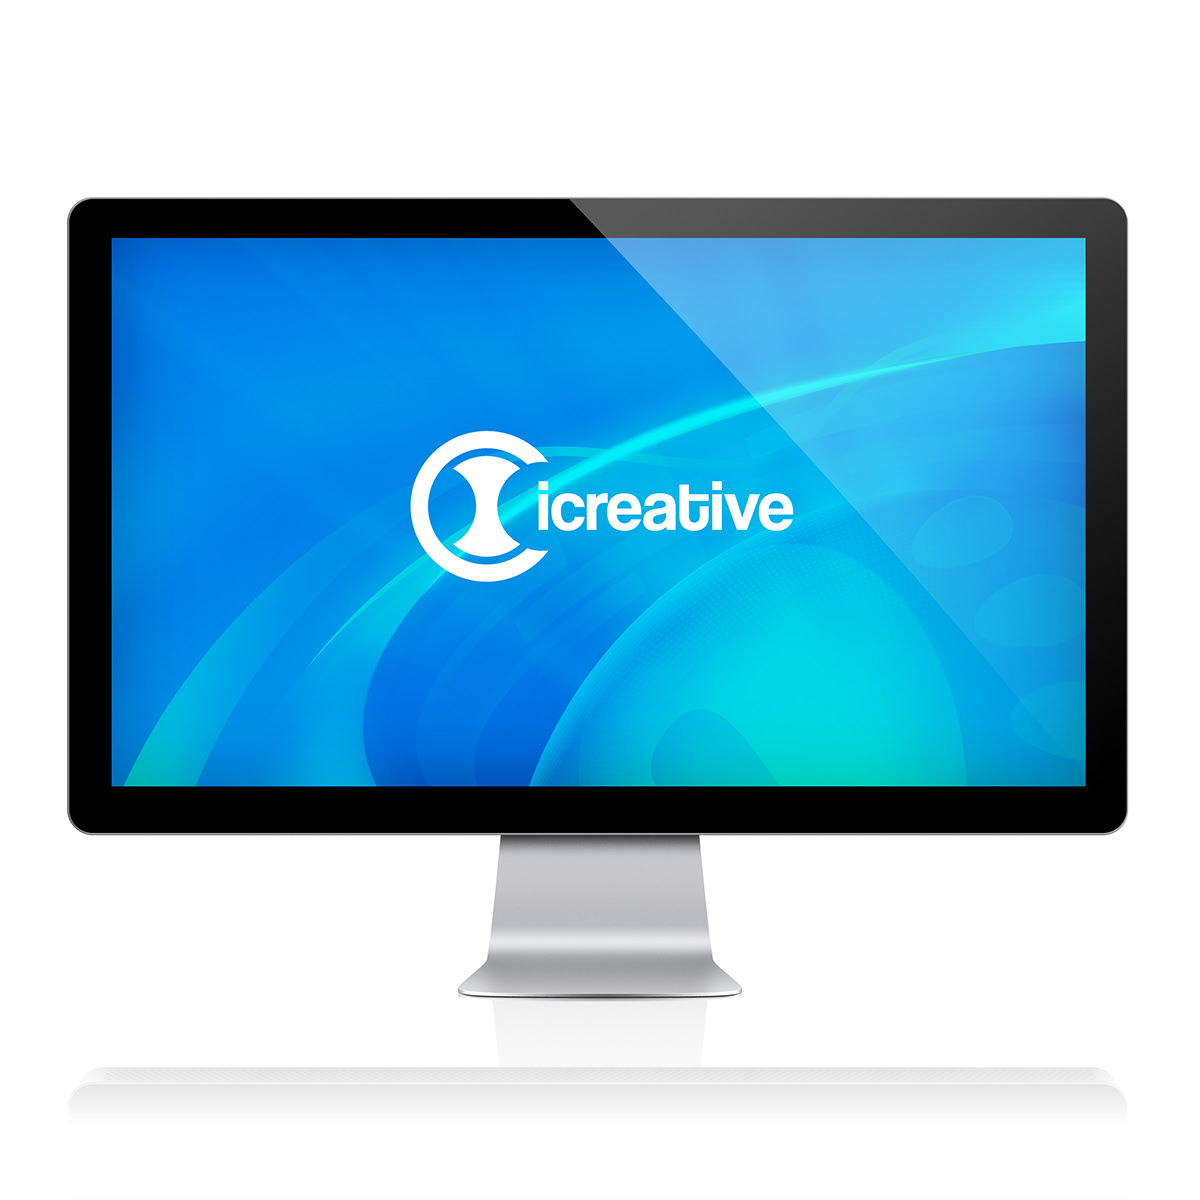 iCreative logo identity